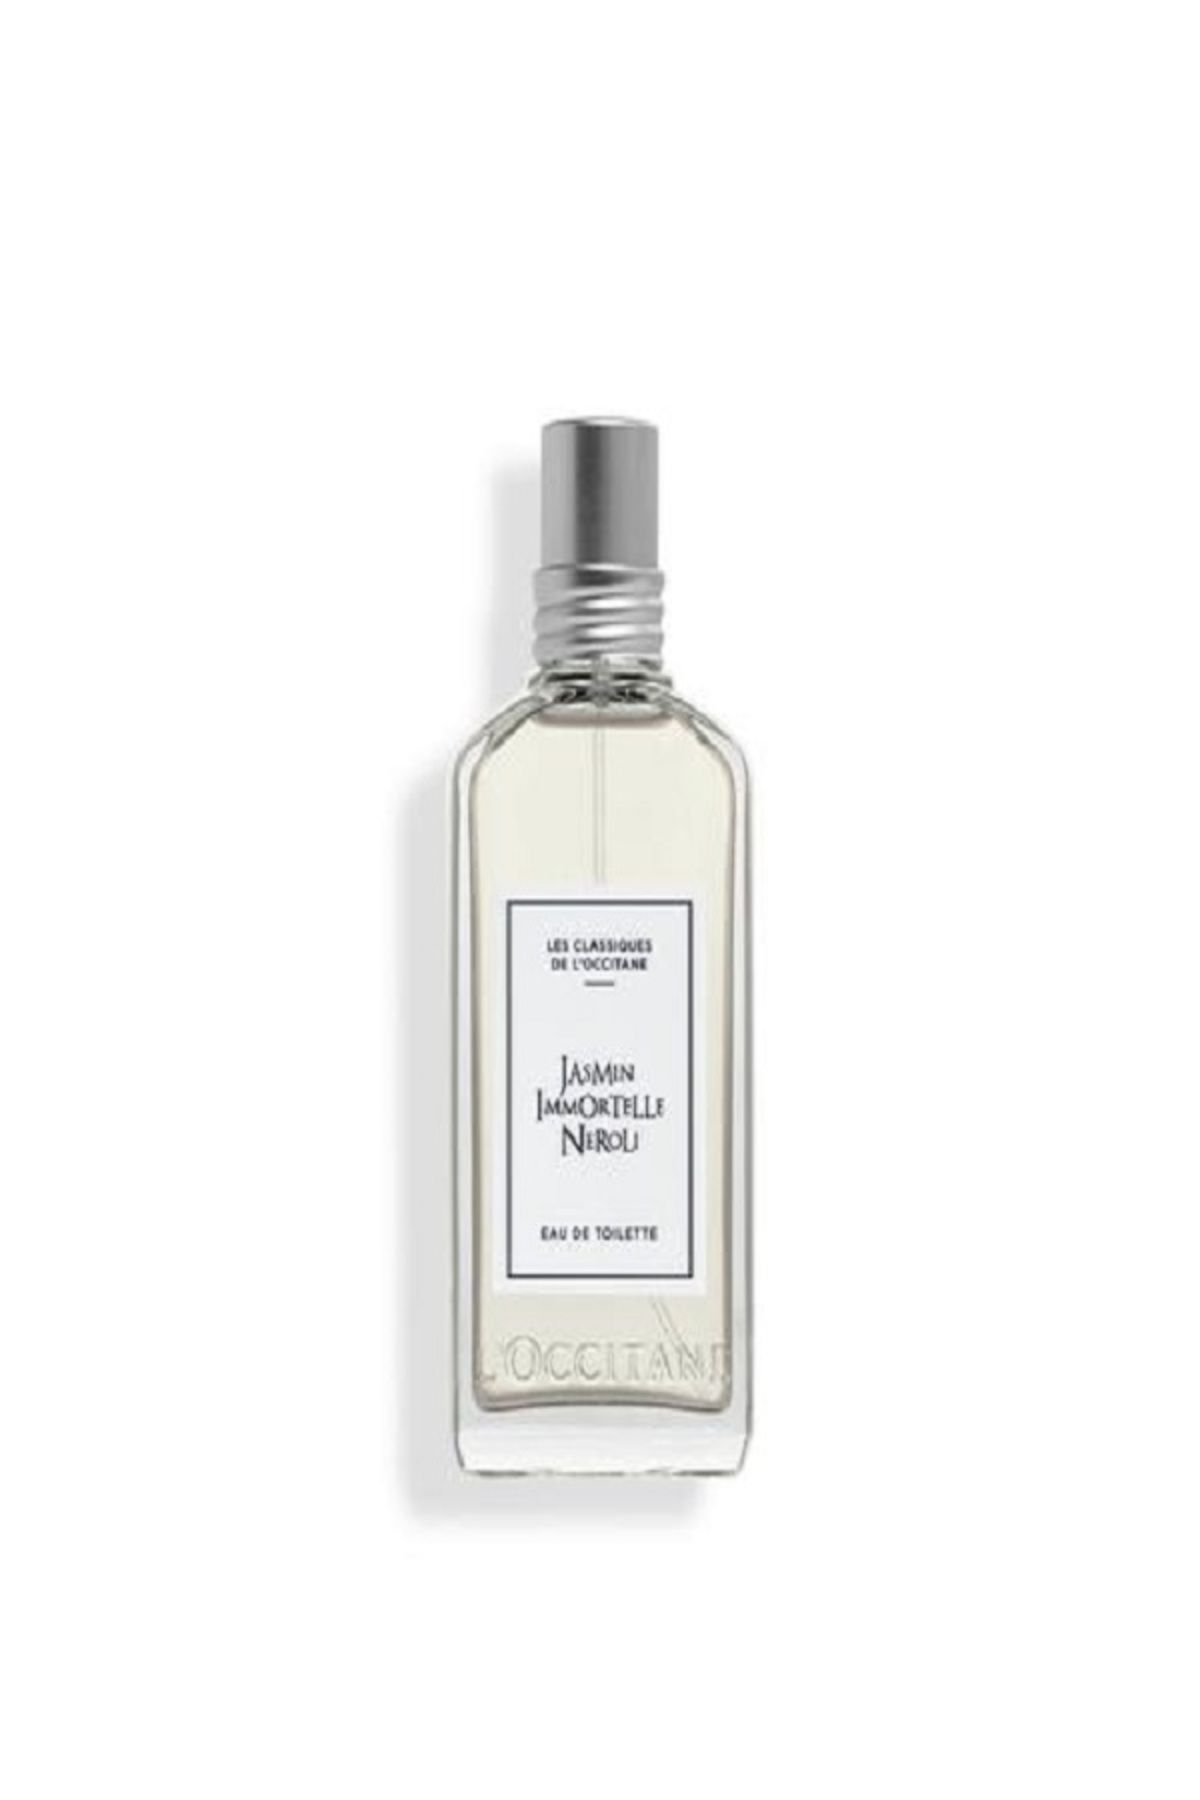 L'Occitane Jasmin Immortelle Neroli Eau de Toilette - Yasemin Portakal Çiçeği Parfüm EDT 50ml